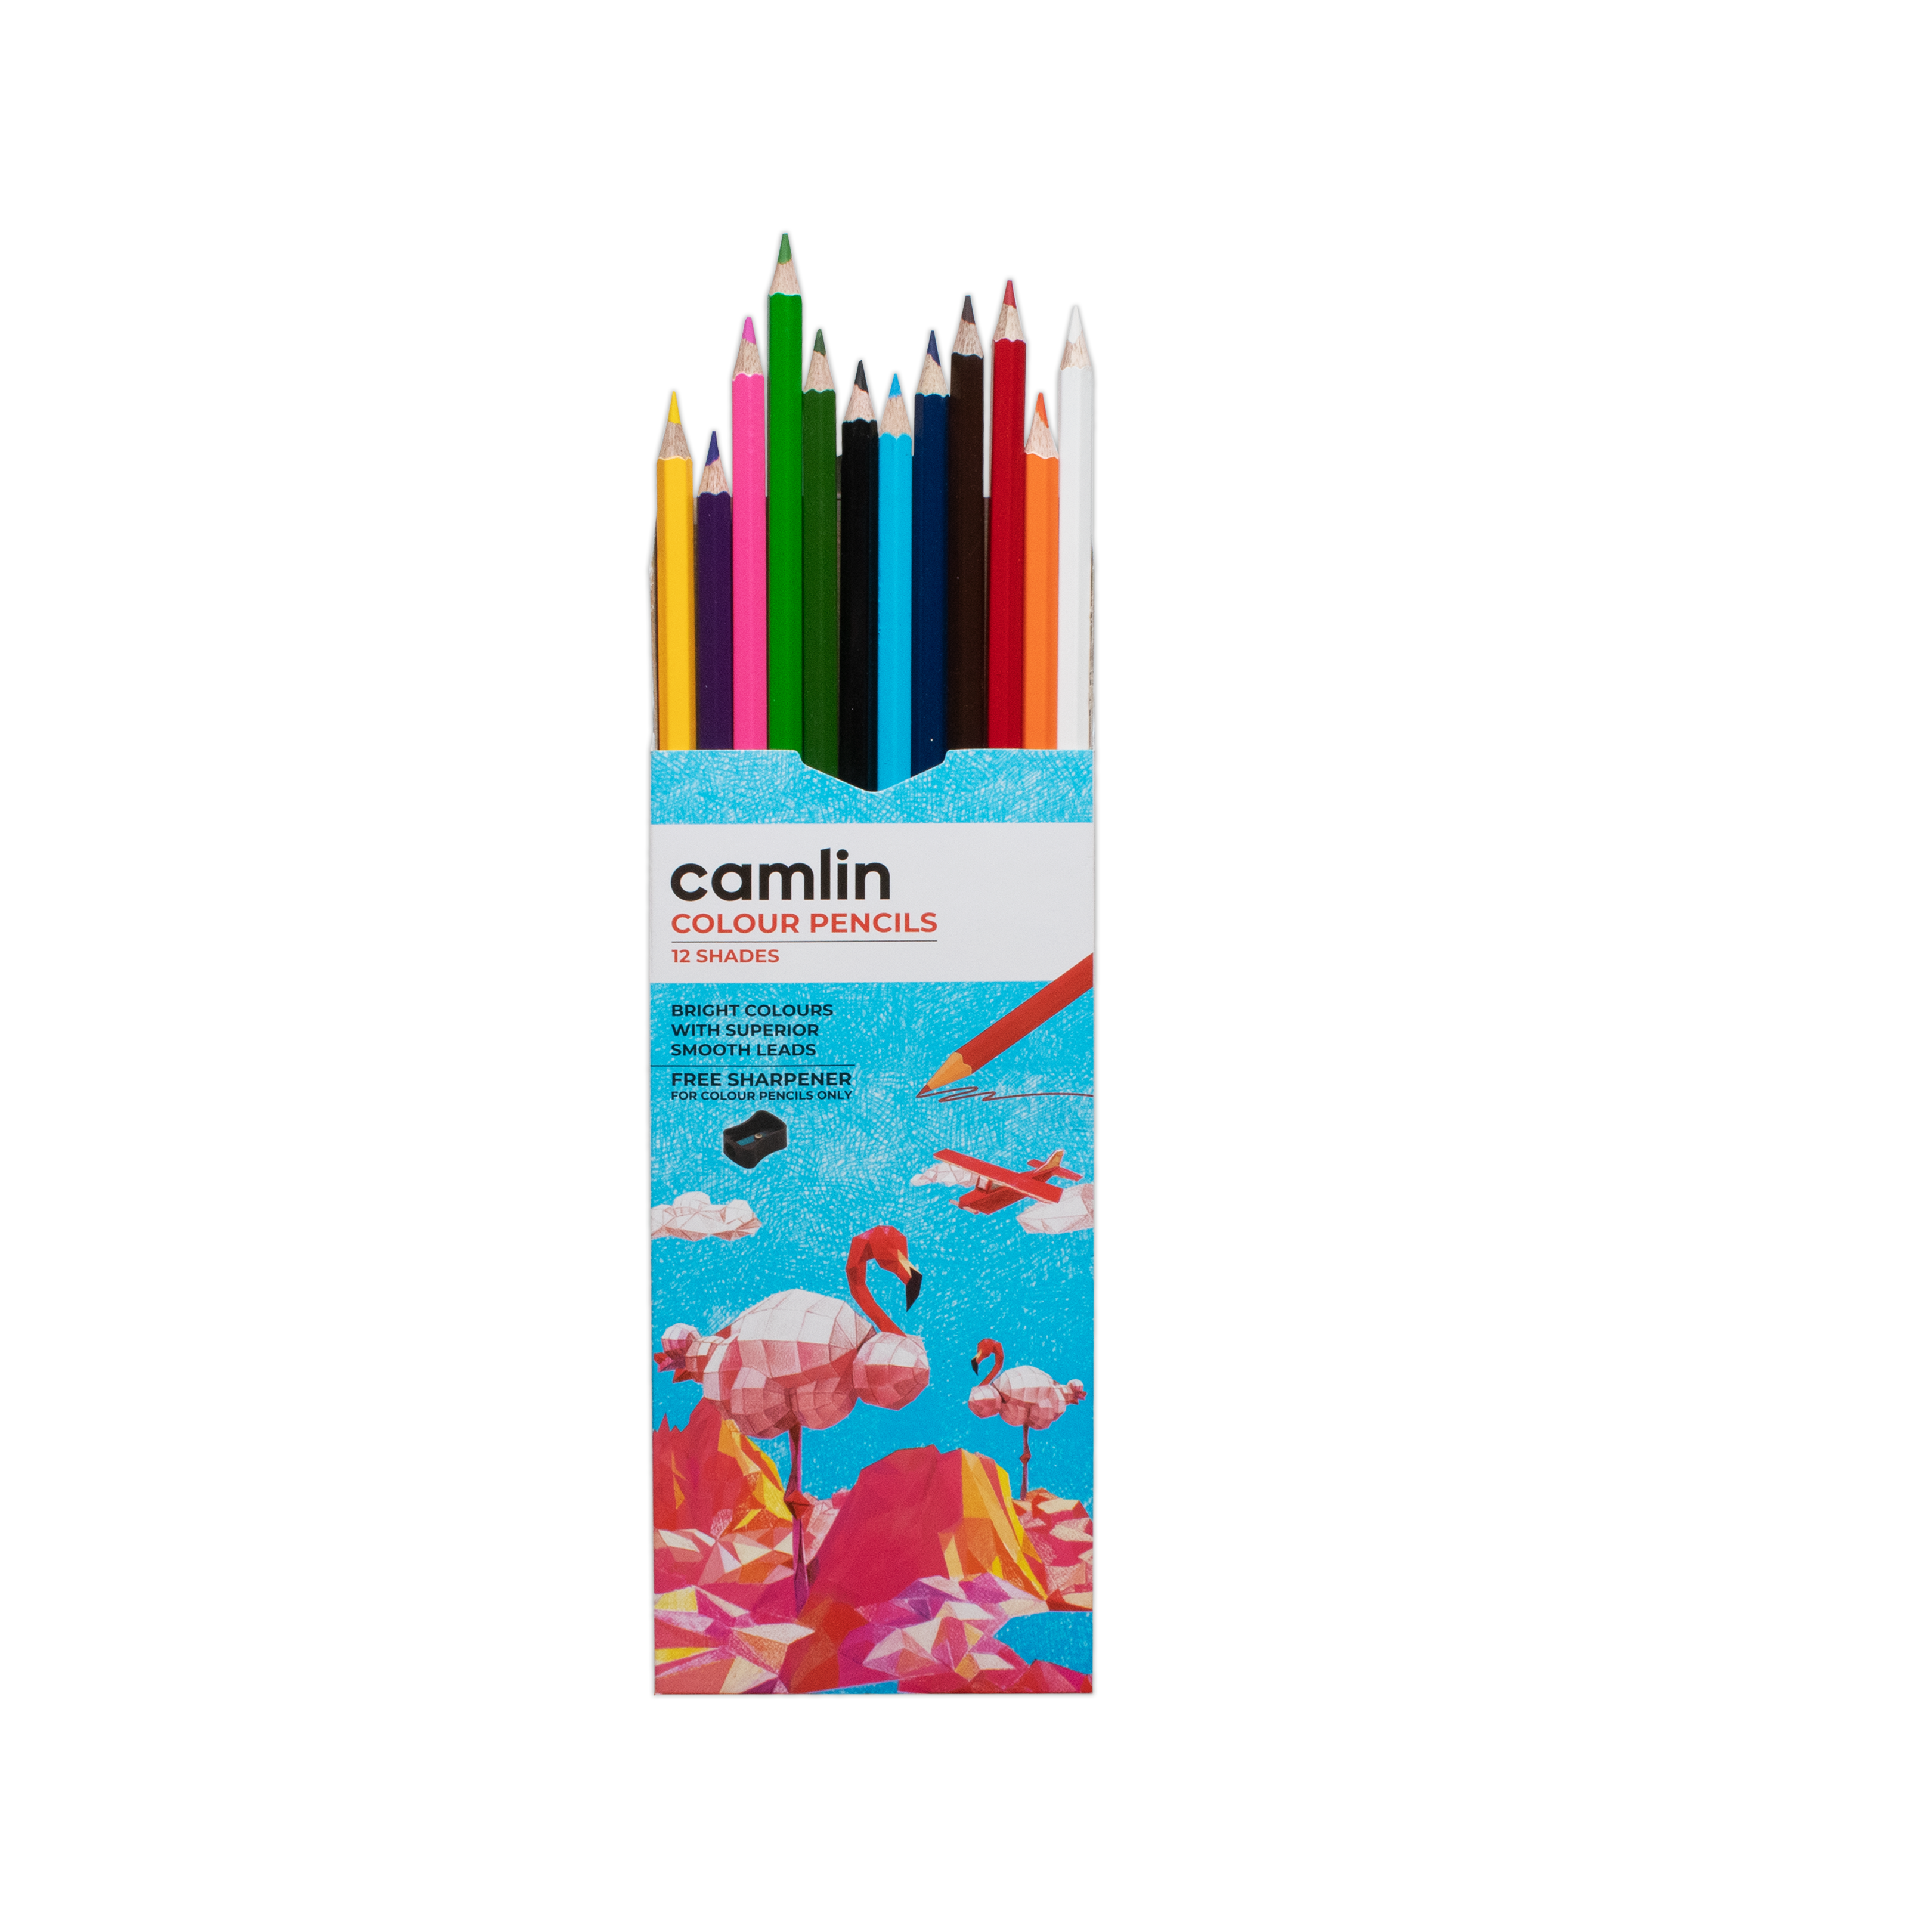 King Colour Pencils 12 Shades Camlin